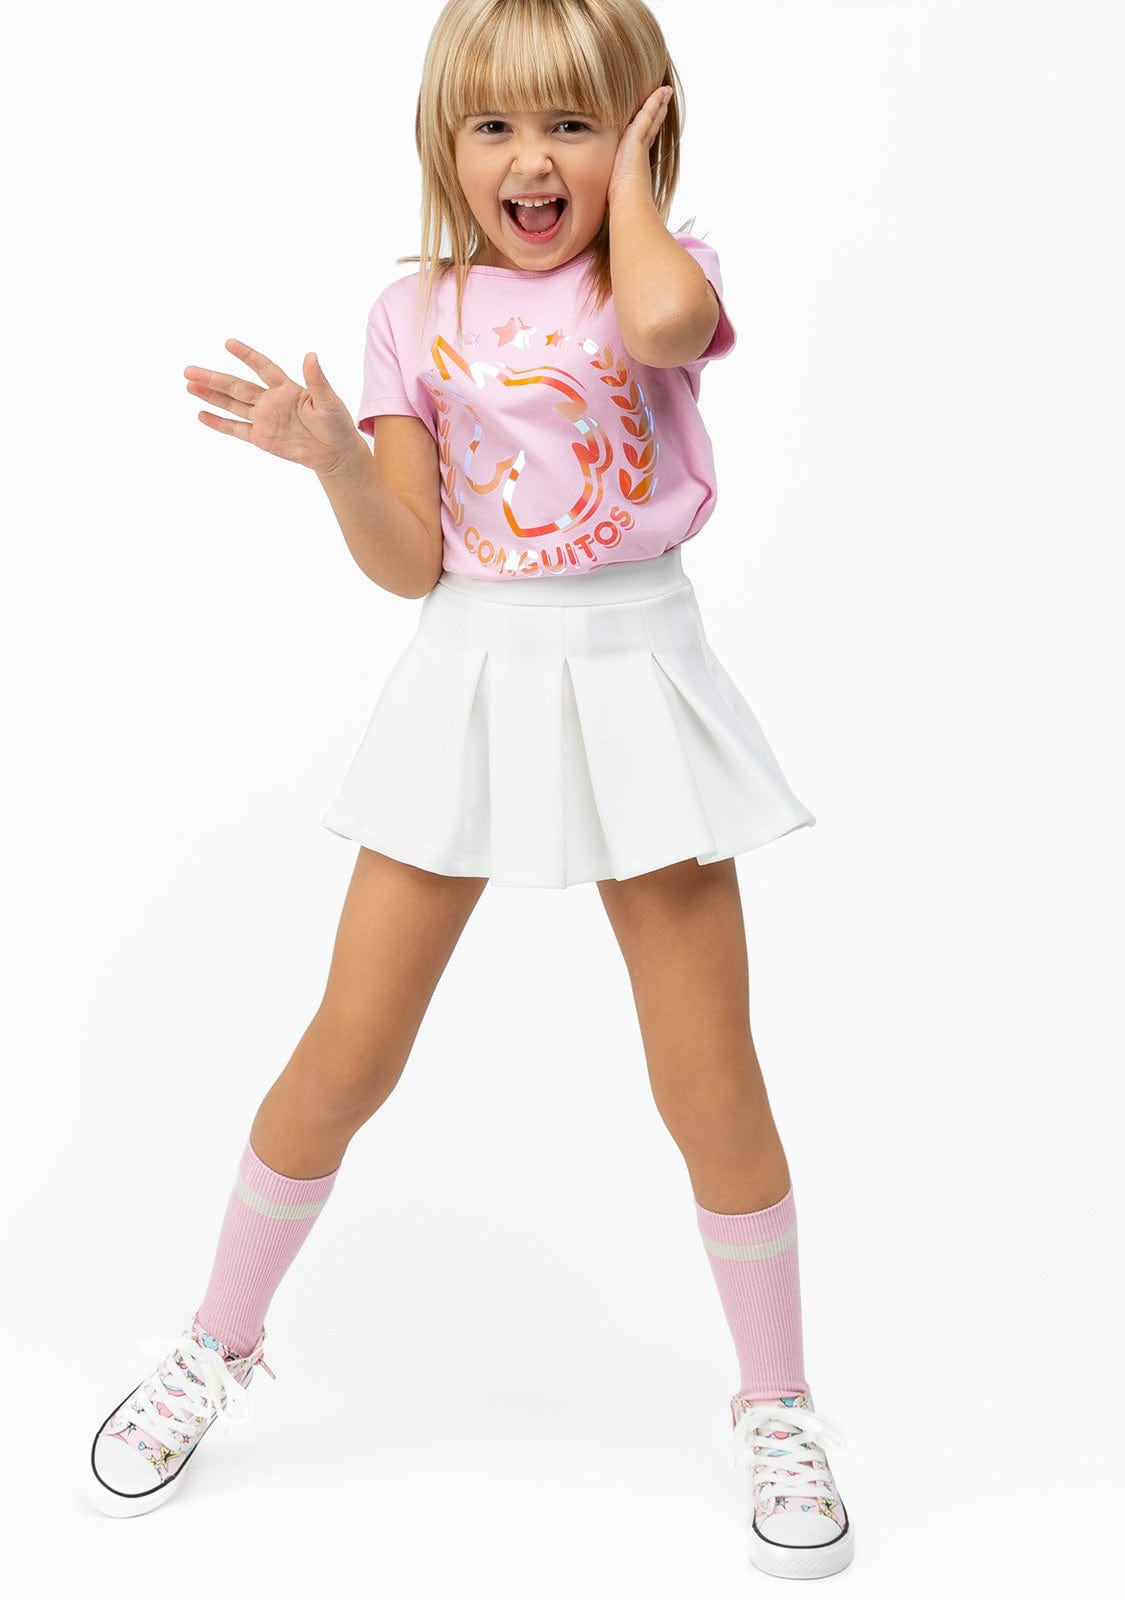 CONGUITOS TEXTIL Clothing Girl's Pink Unicorn T-shirt